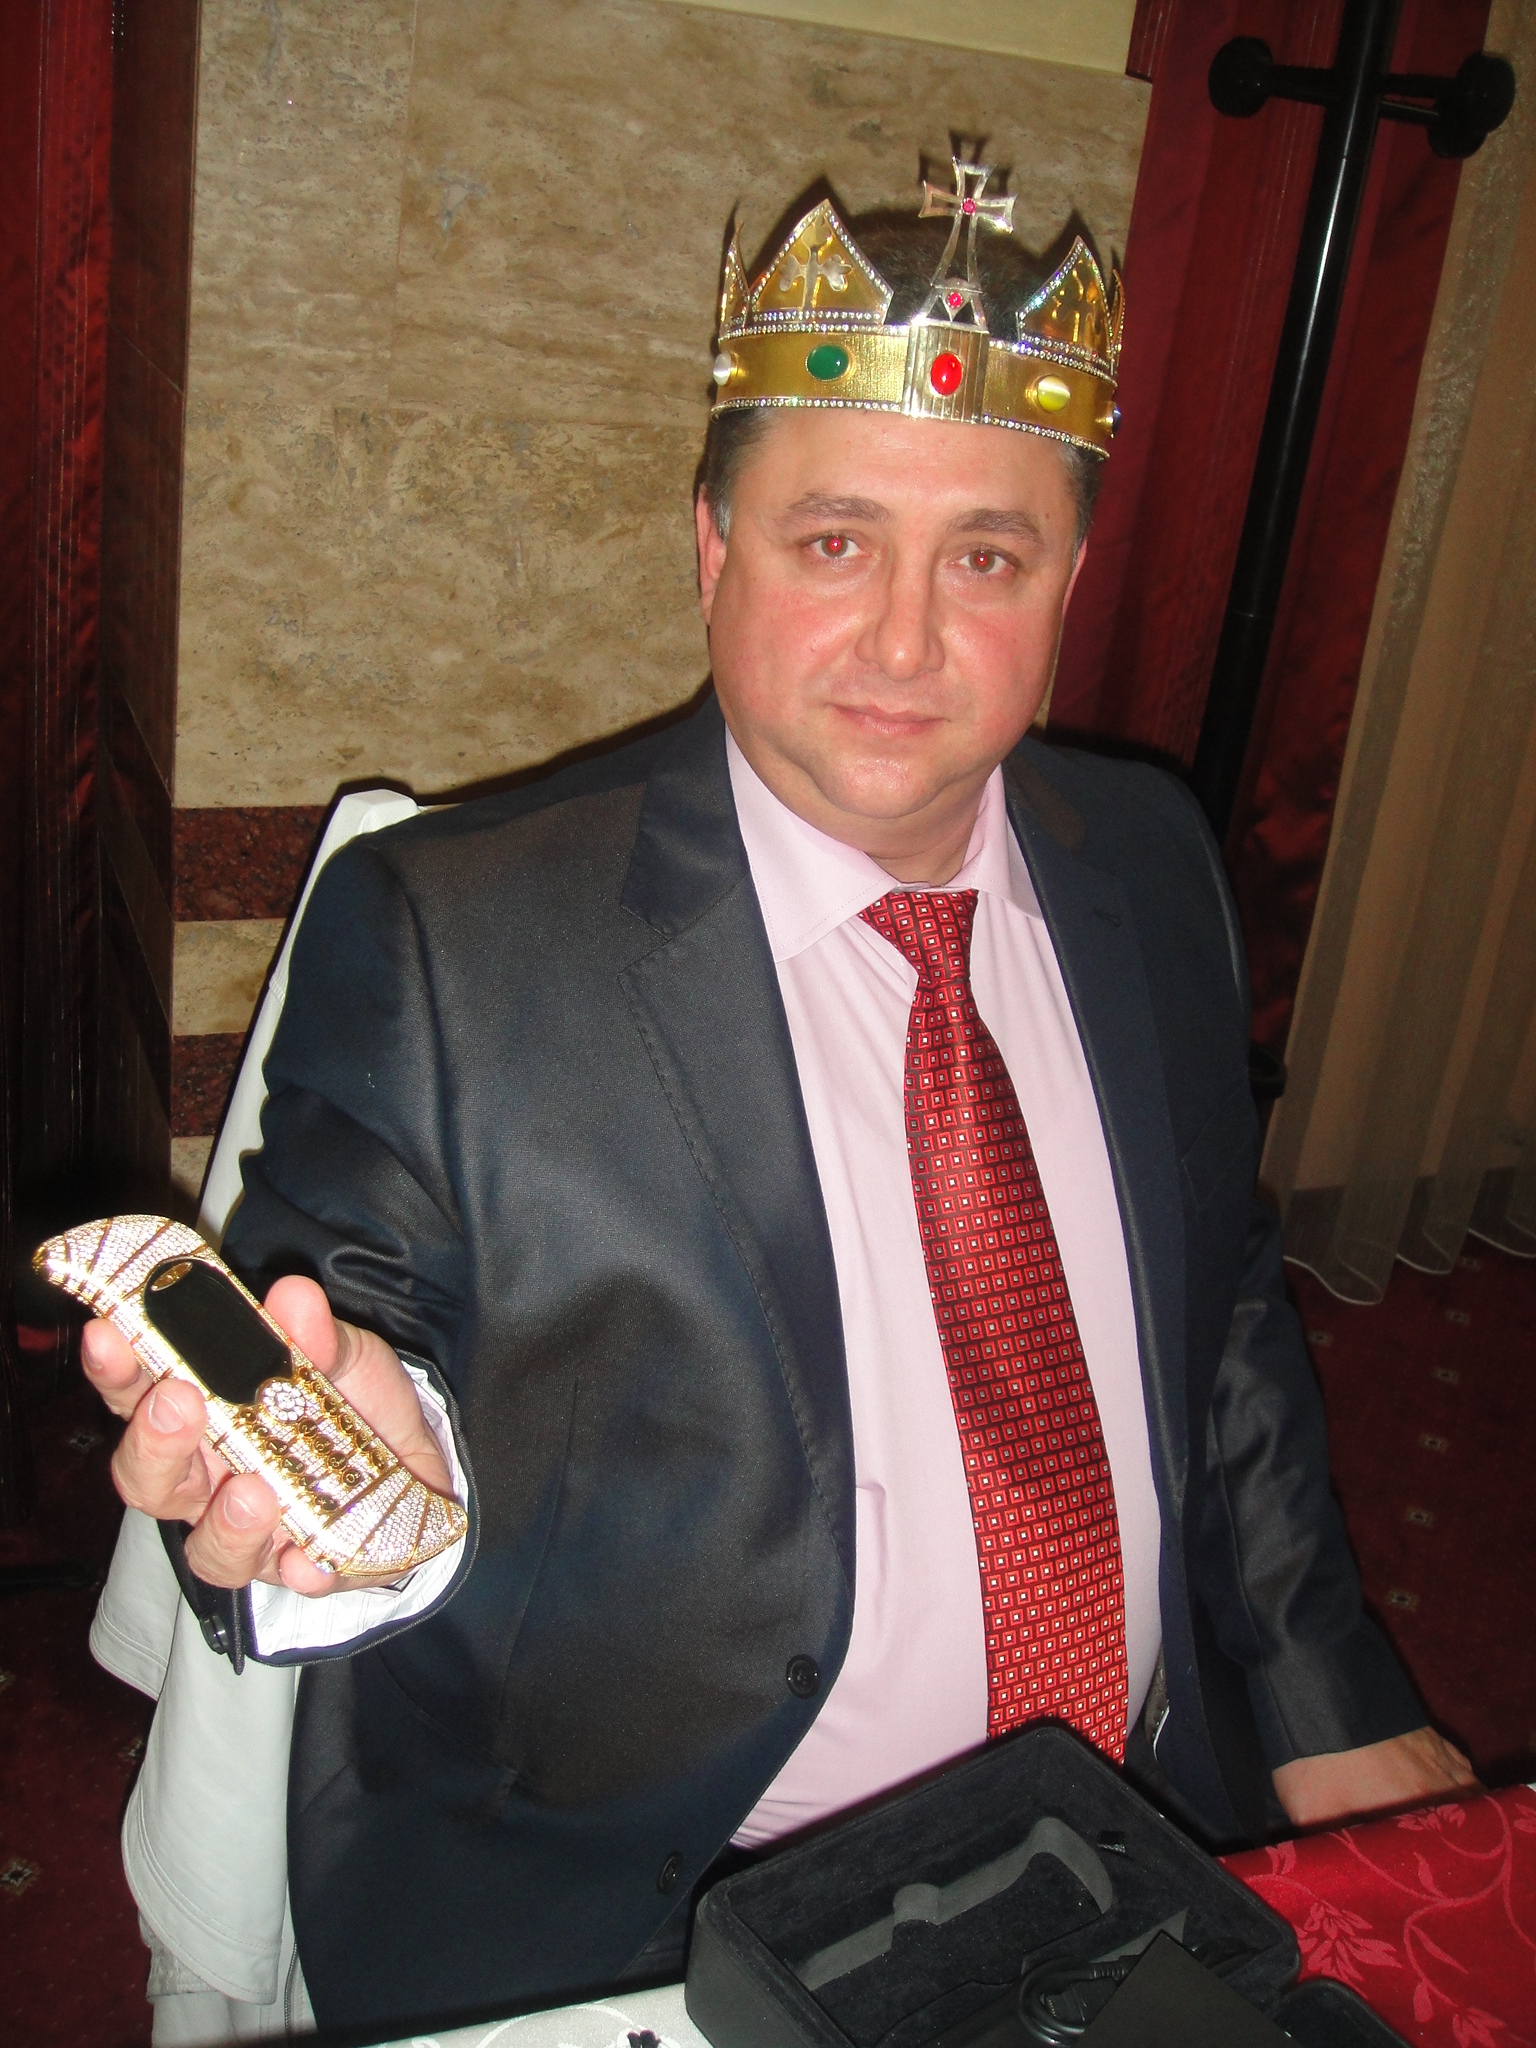 Dan Stanescu si-a asortat la coroana un telefon din aur